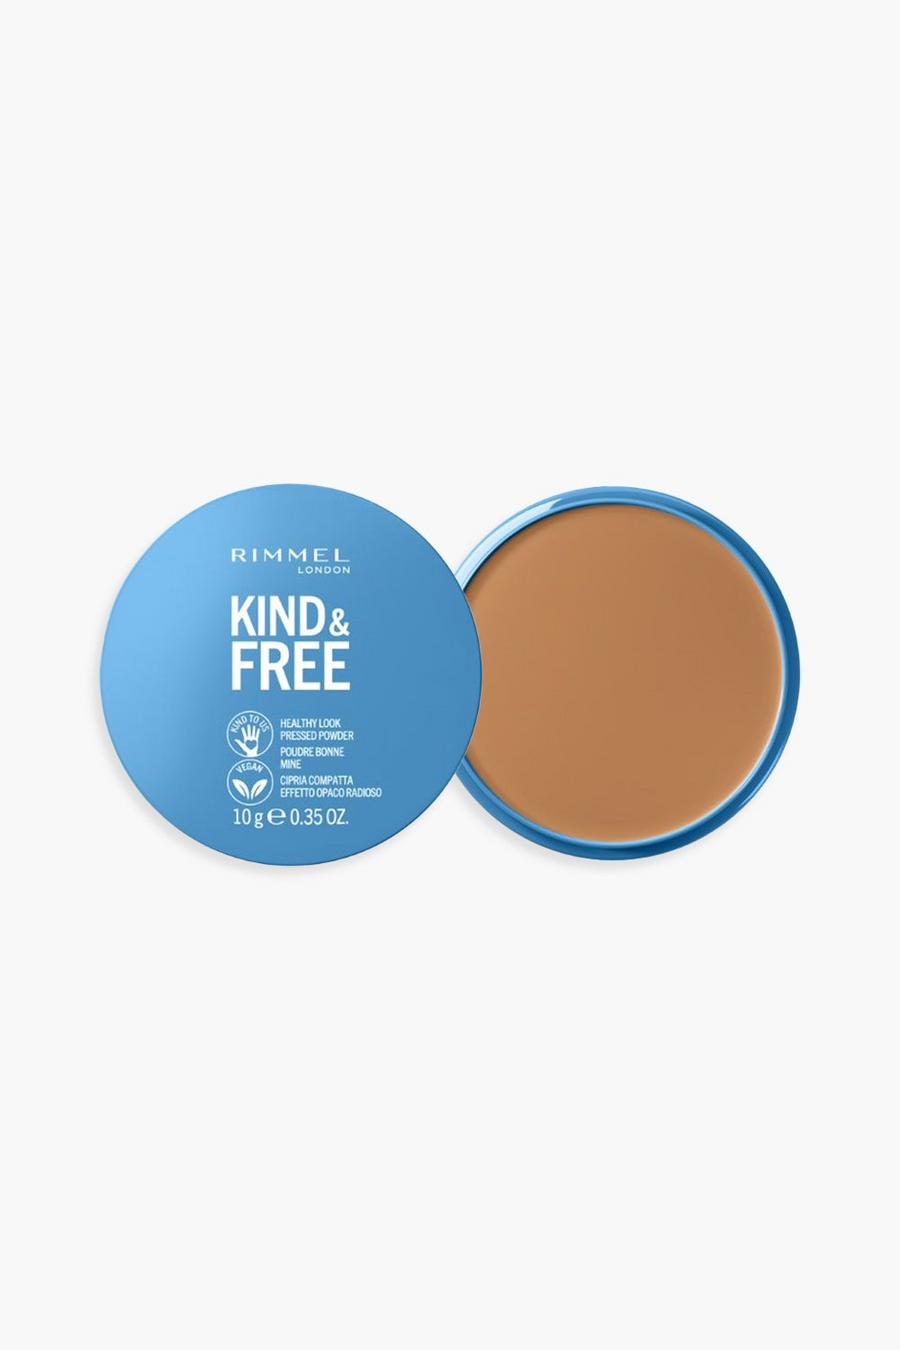 Rimmel Kind & Free - Cipria in polvere Powder Tan image number 1